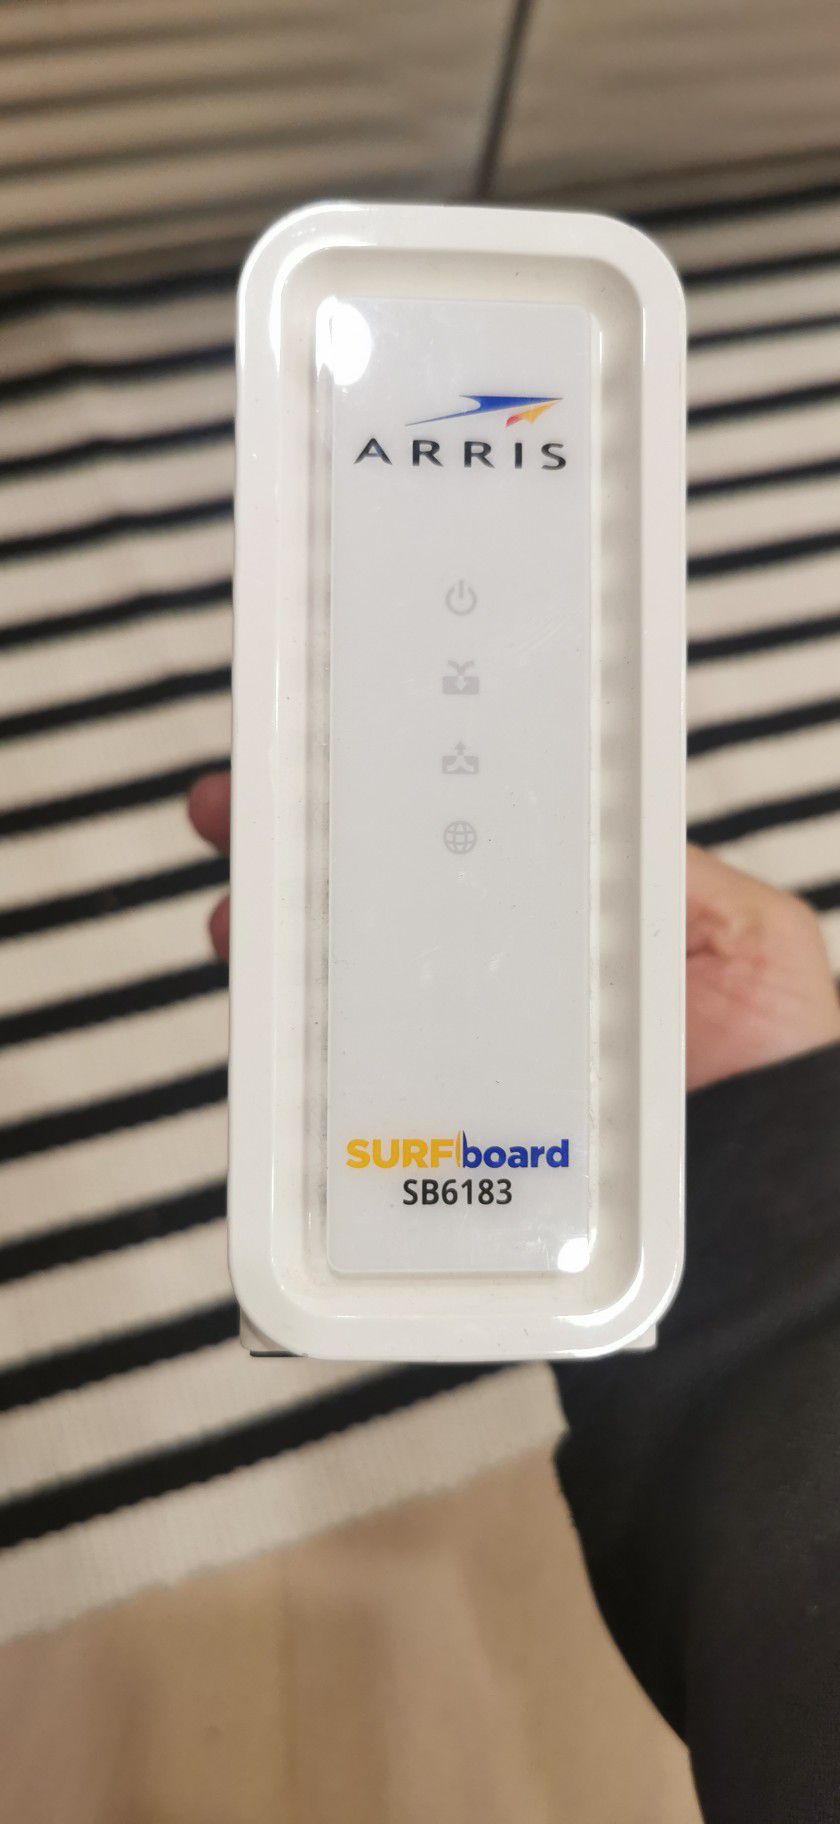 ARRIS Surfboard SB6183 cable modem

